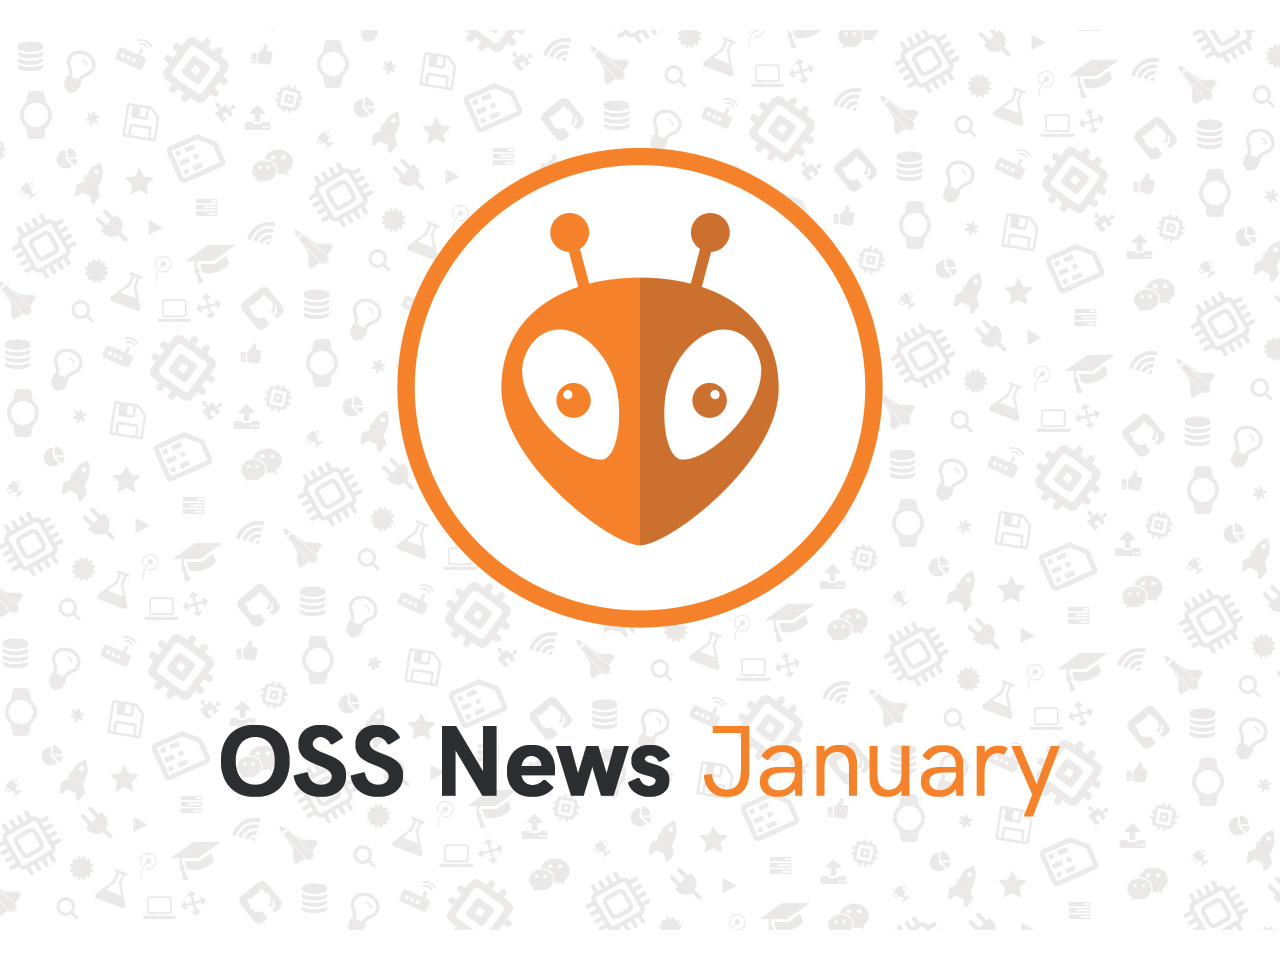 PlatformIO Open Source January Updates